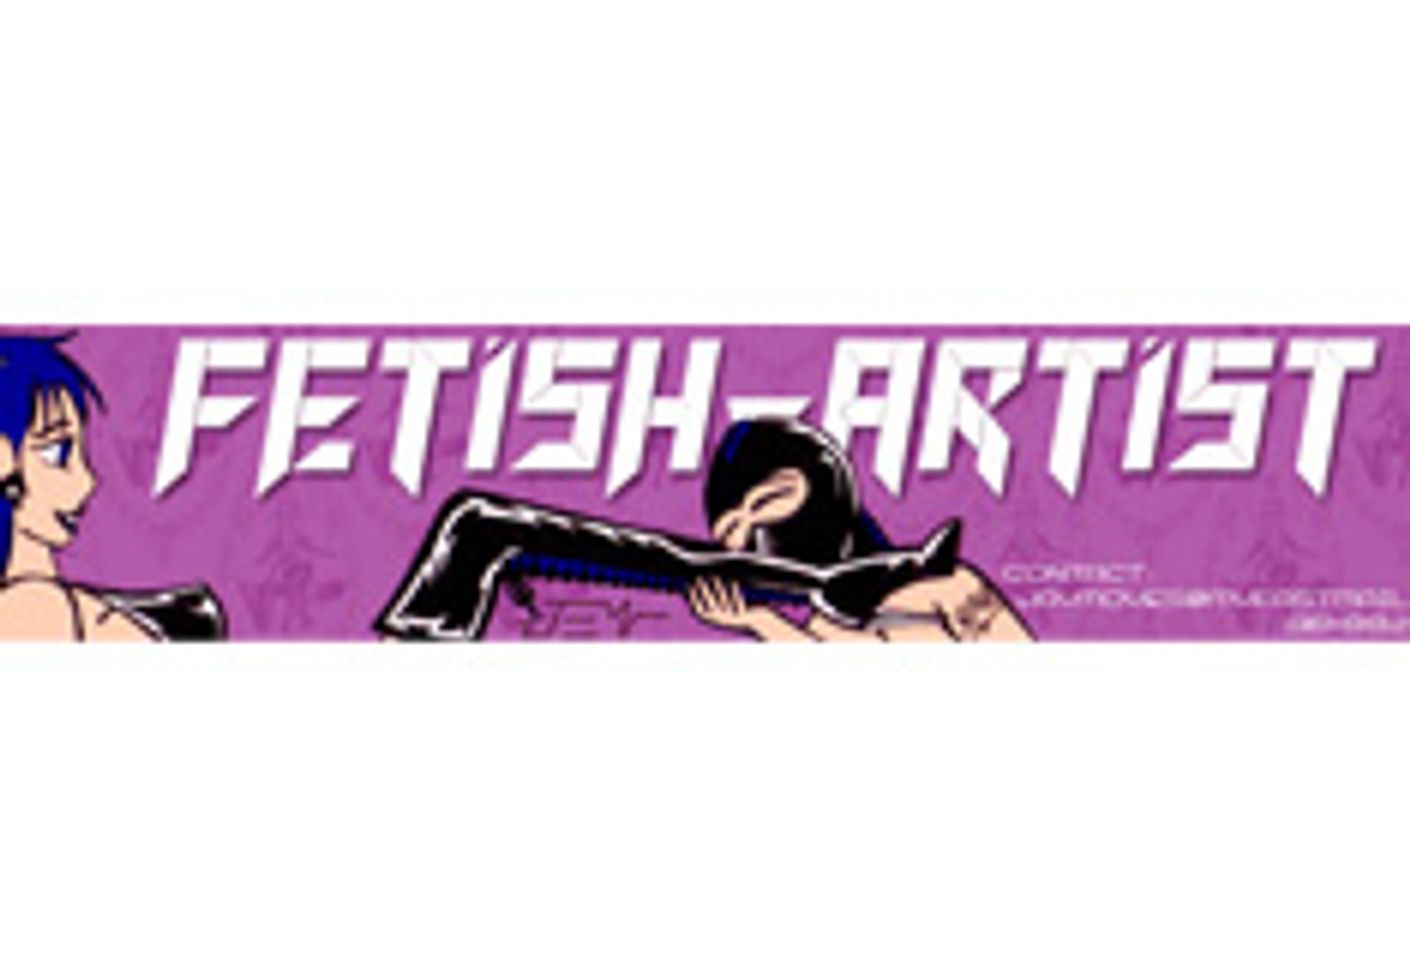 Fetish-artist.com Invades Internet Airwaves, Comic Convention